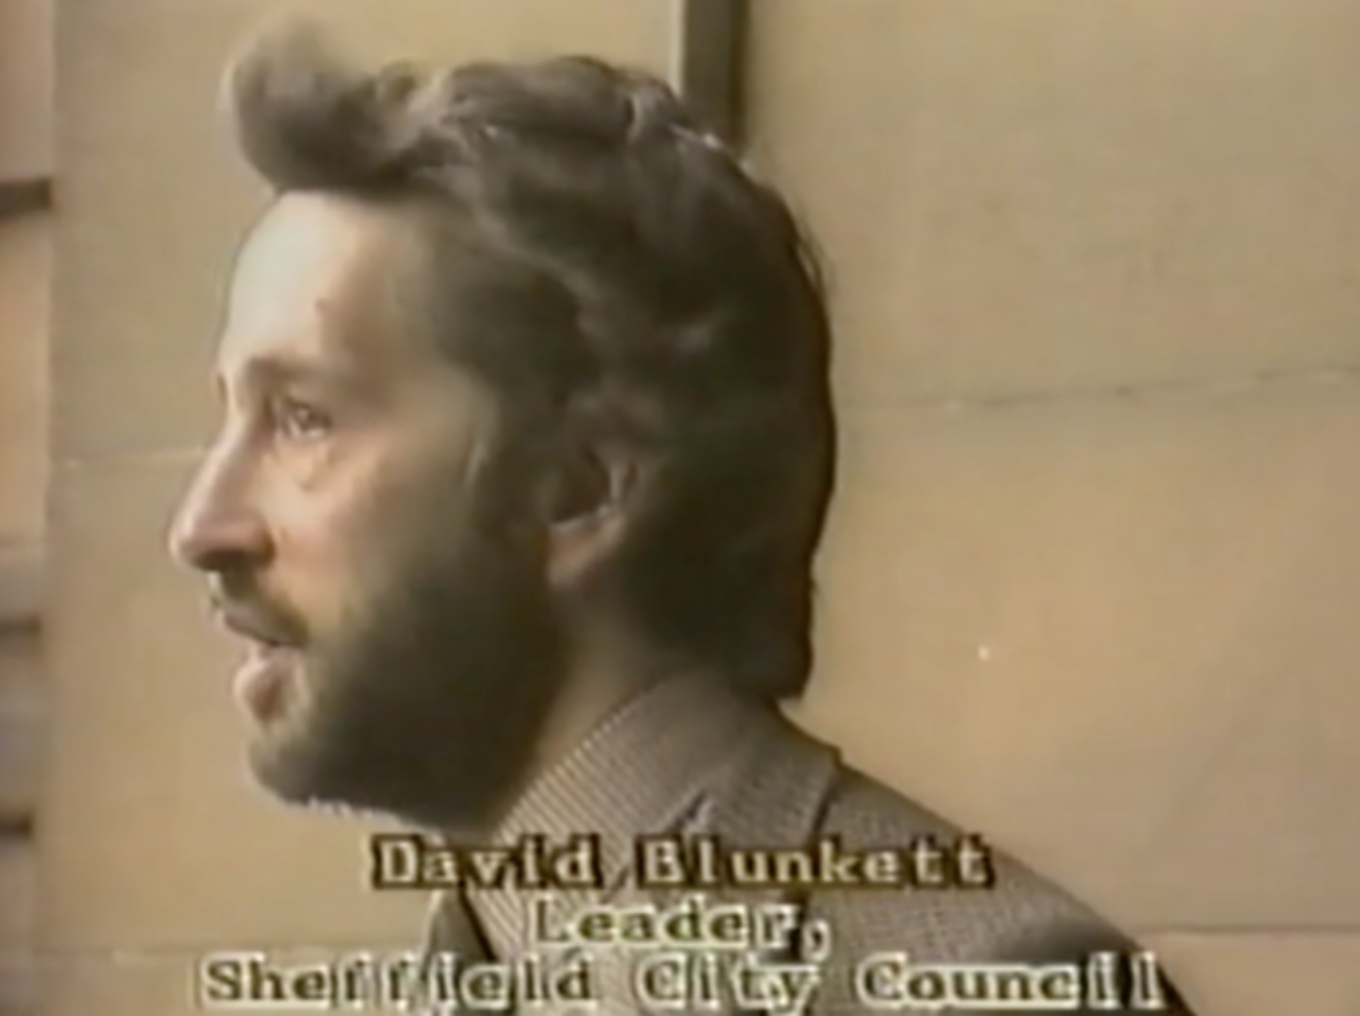 David blunkett council leader